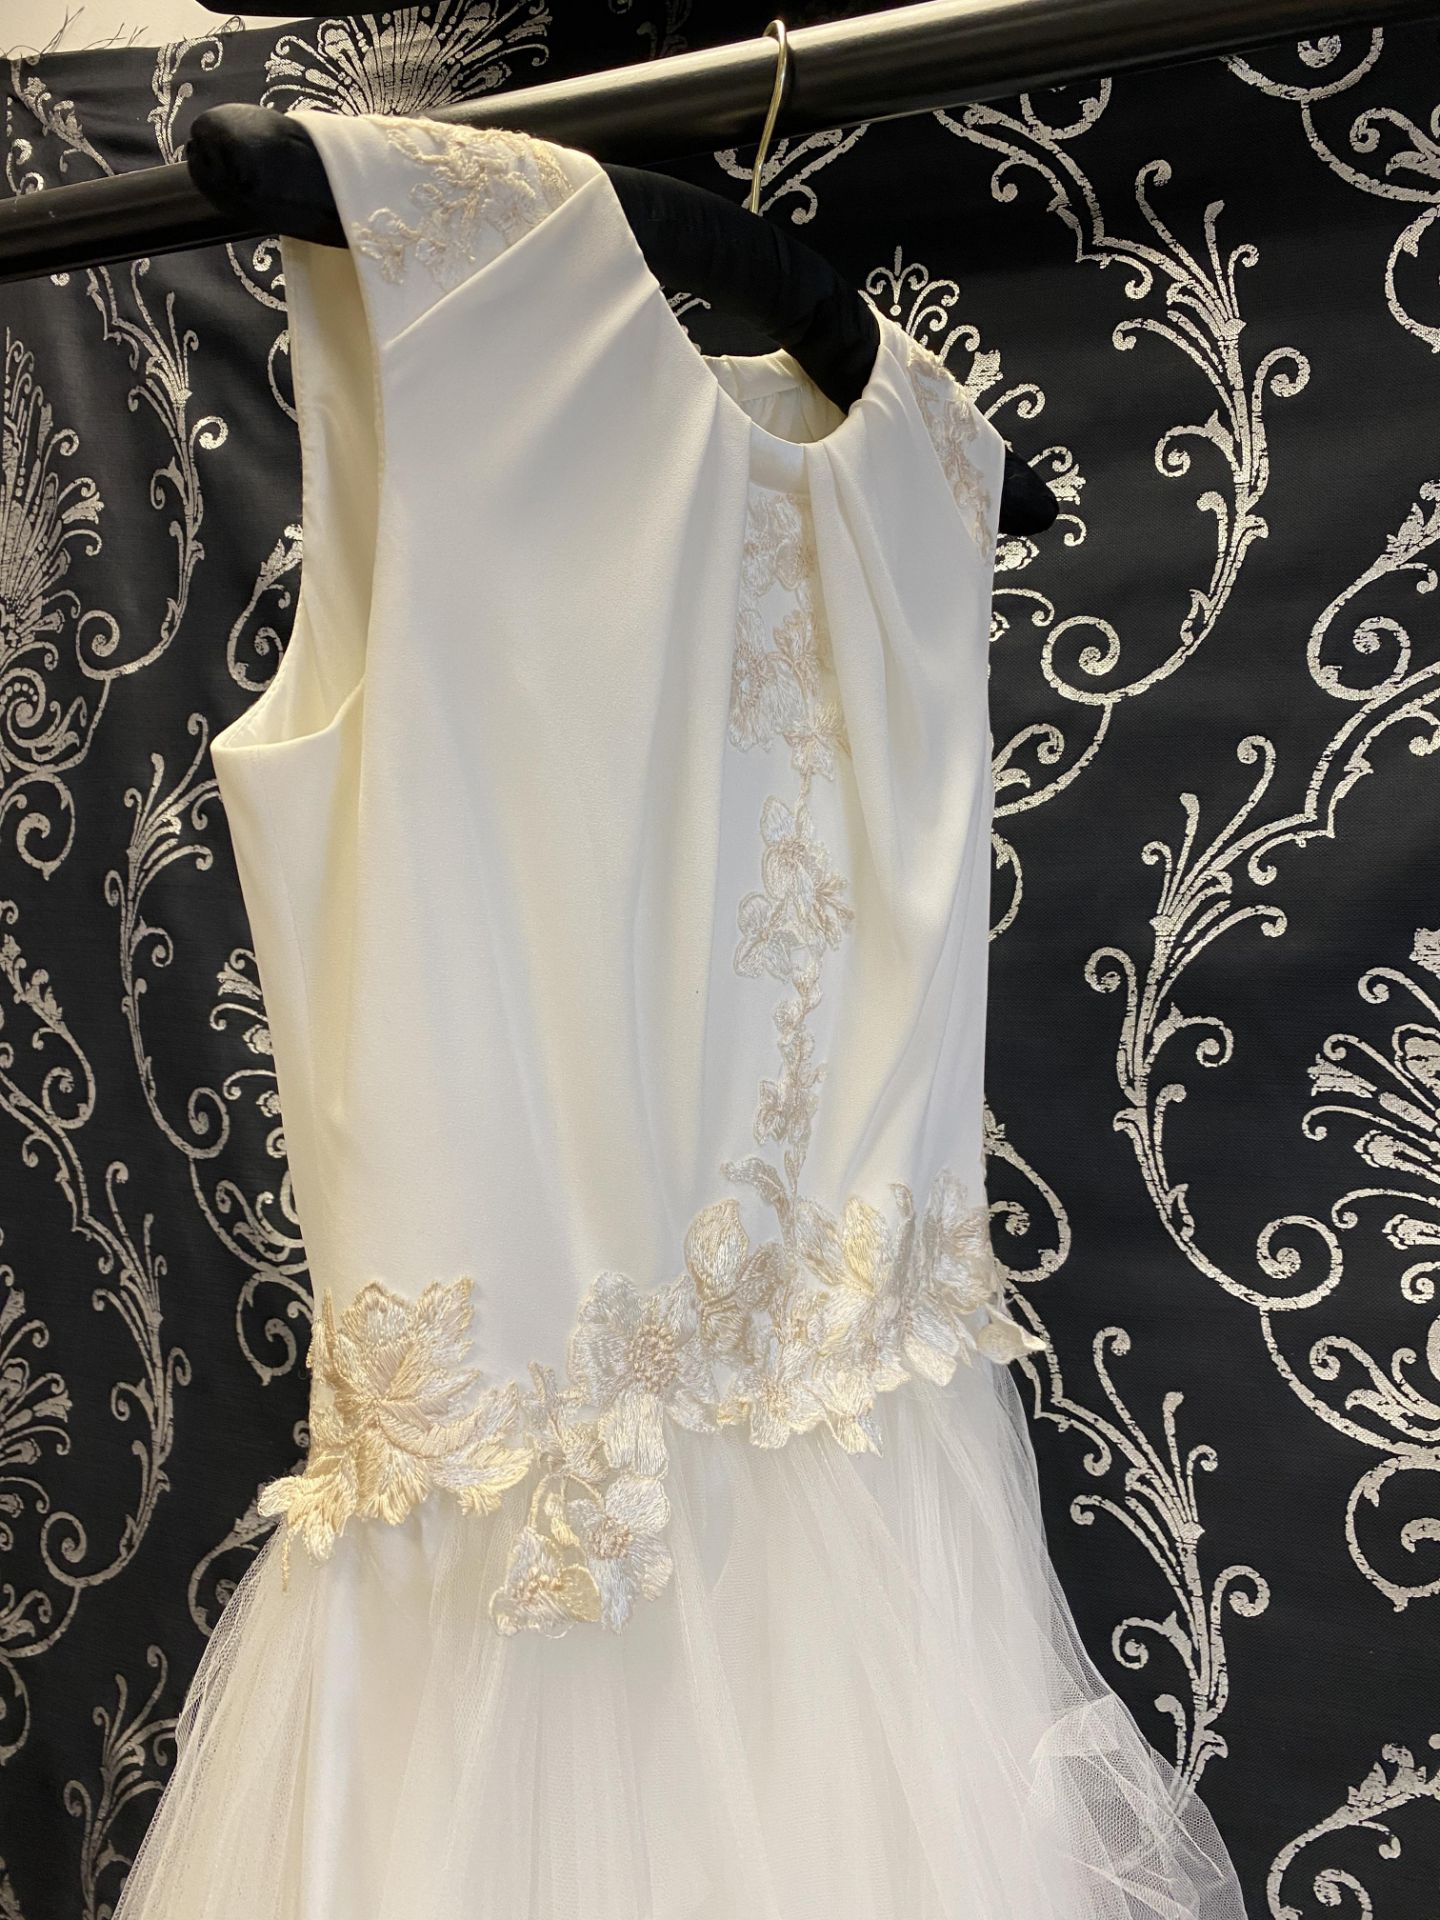 1 x DAVID FIELDEN '8816' Jewel Neck Full Skirted Designer Wedding Dress RRP £2,850 UK 12 - Image 4 of 9